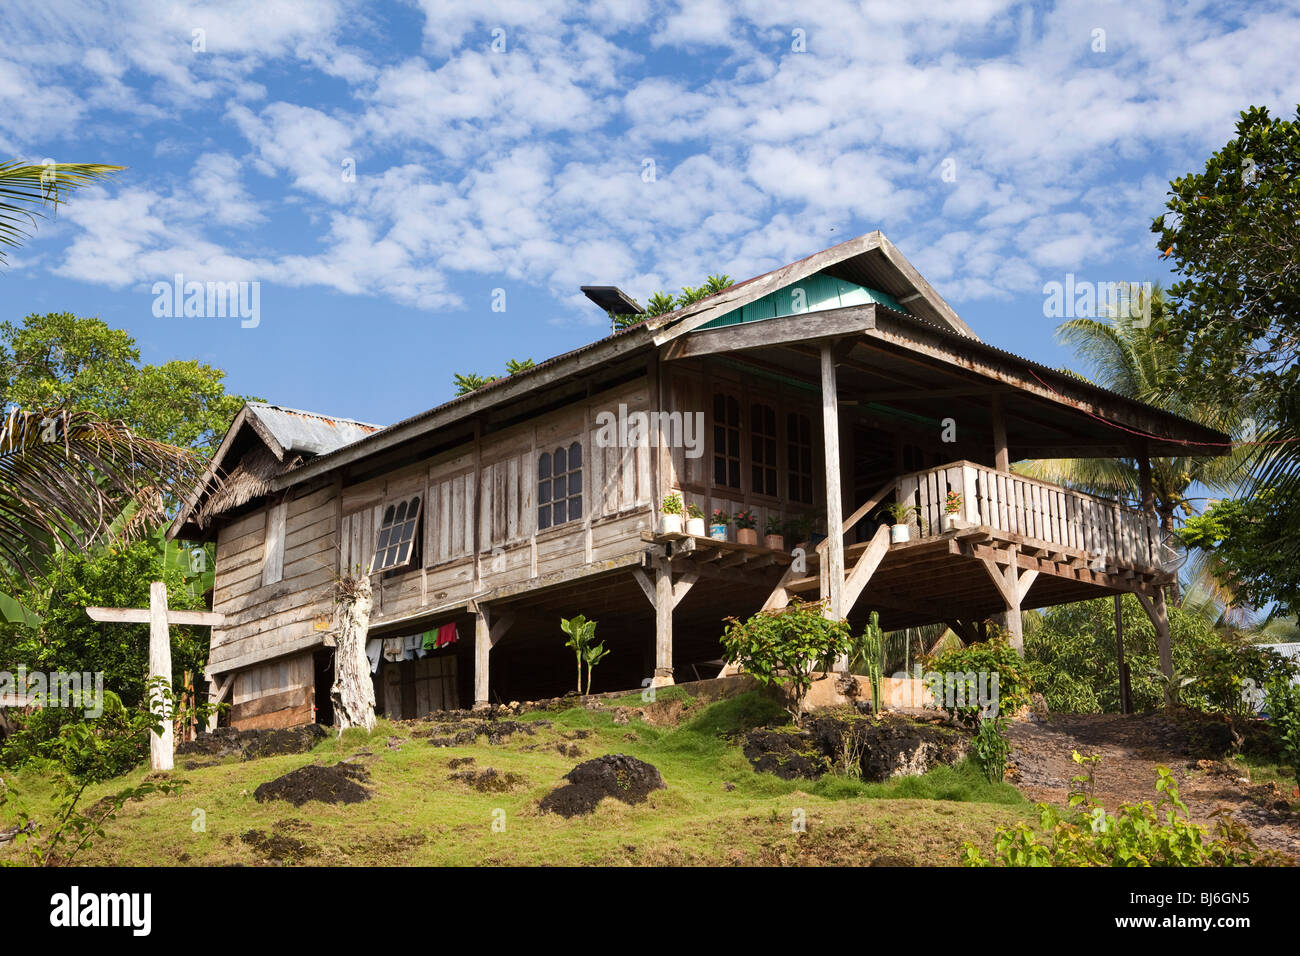 Indonesia, Sulawesi, Buton Island, Labundo Bundo substantial wooden village house Stock Photo